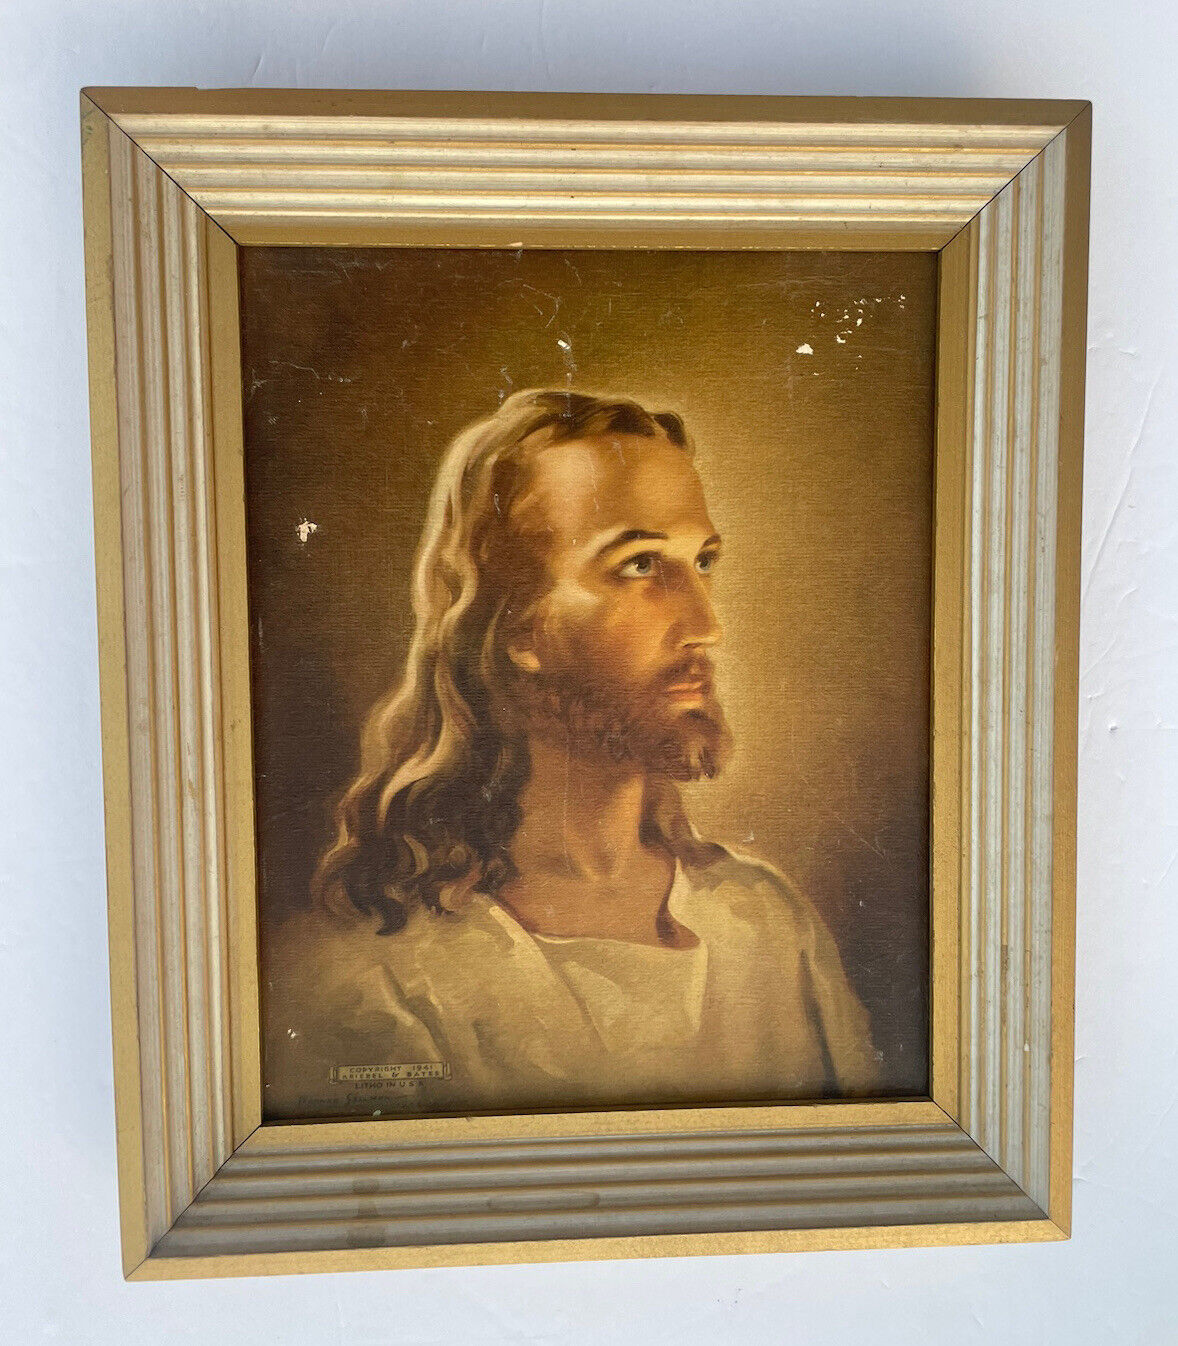 Vtg Warner Sallman Head Of Jesus Lithograph Wooden Frame 12x10 Copyright 1941